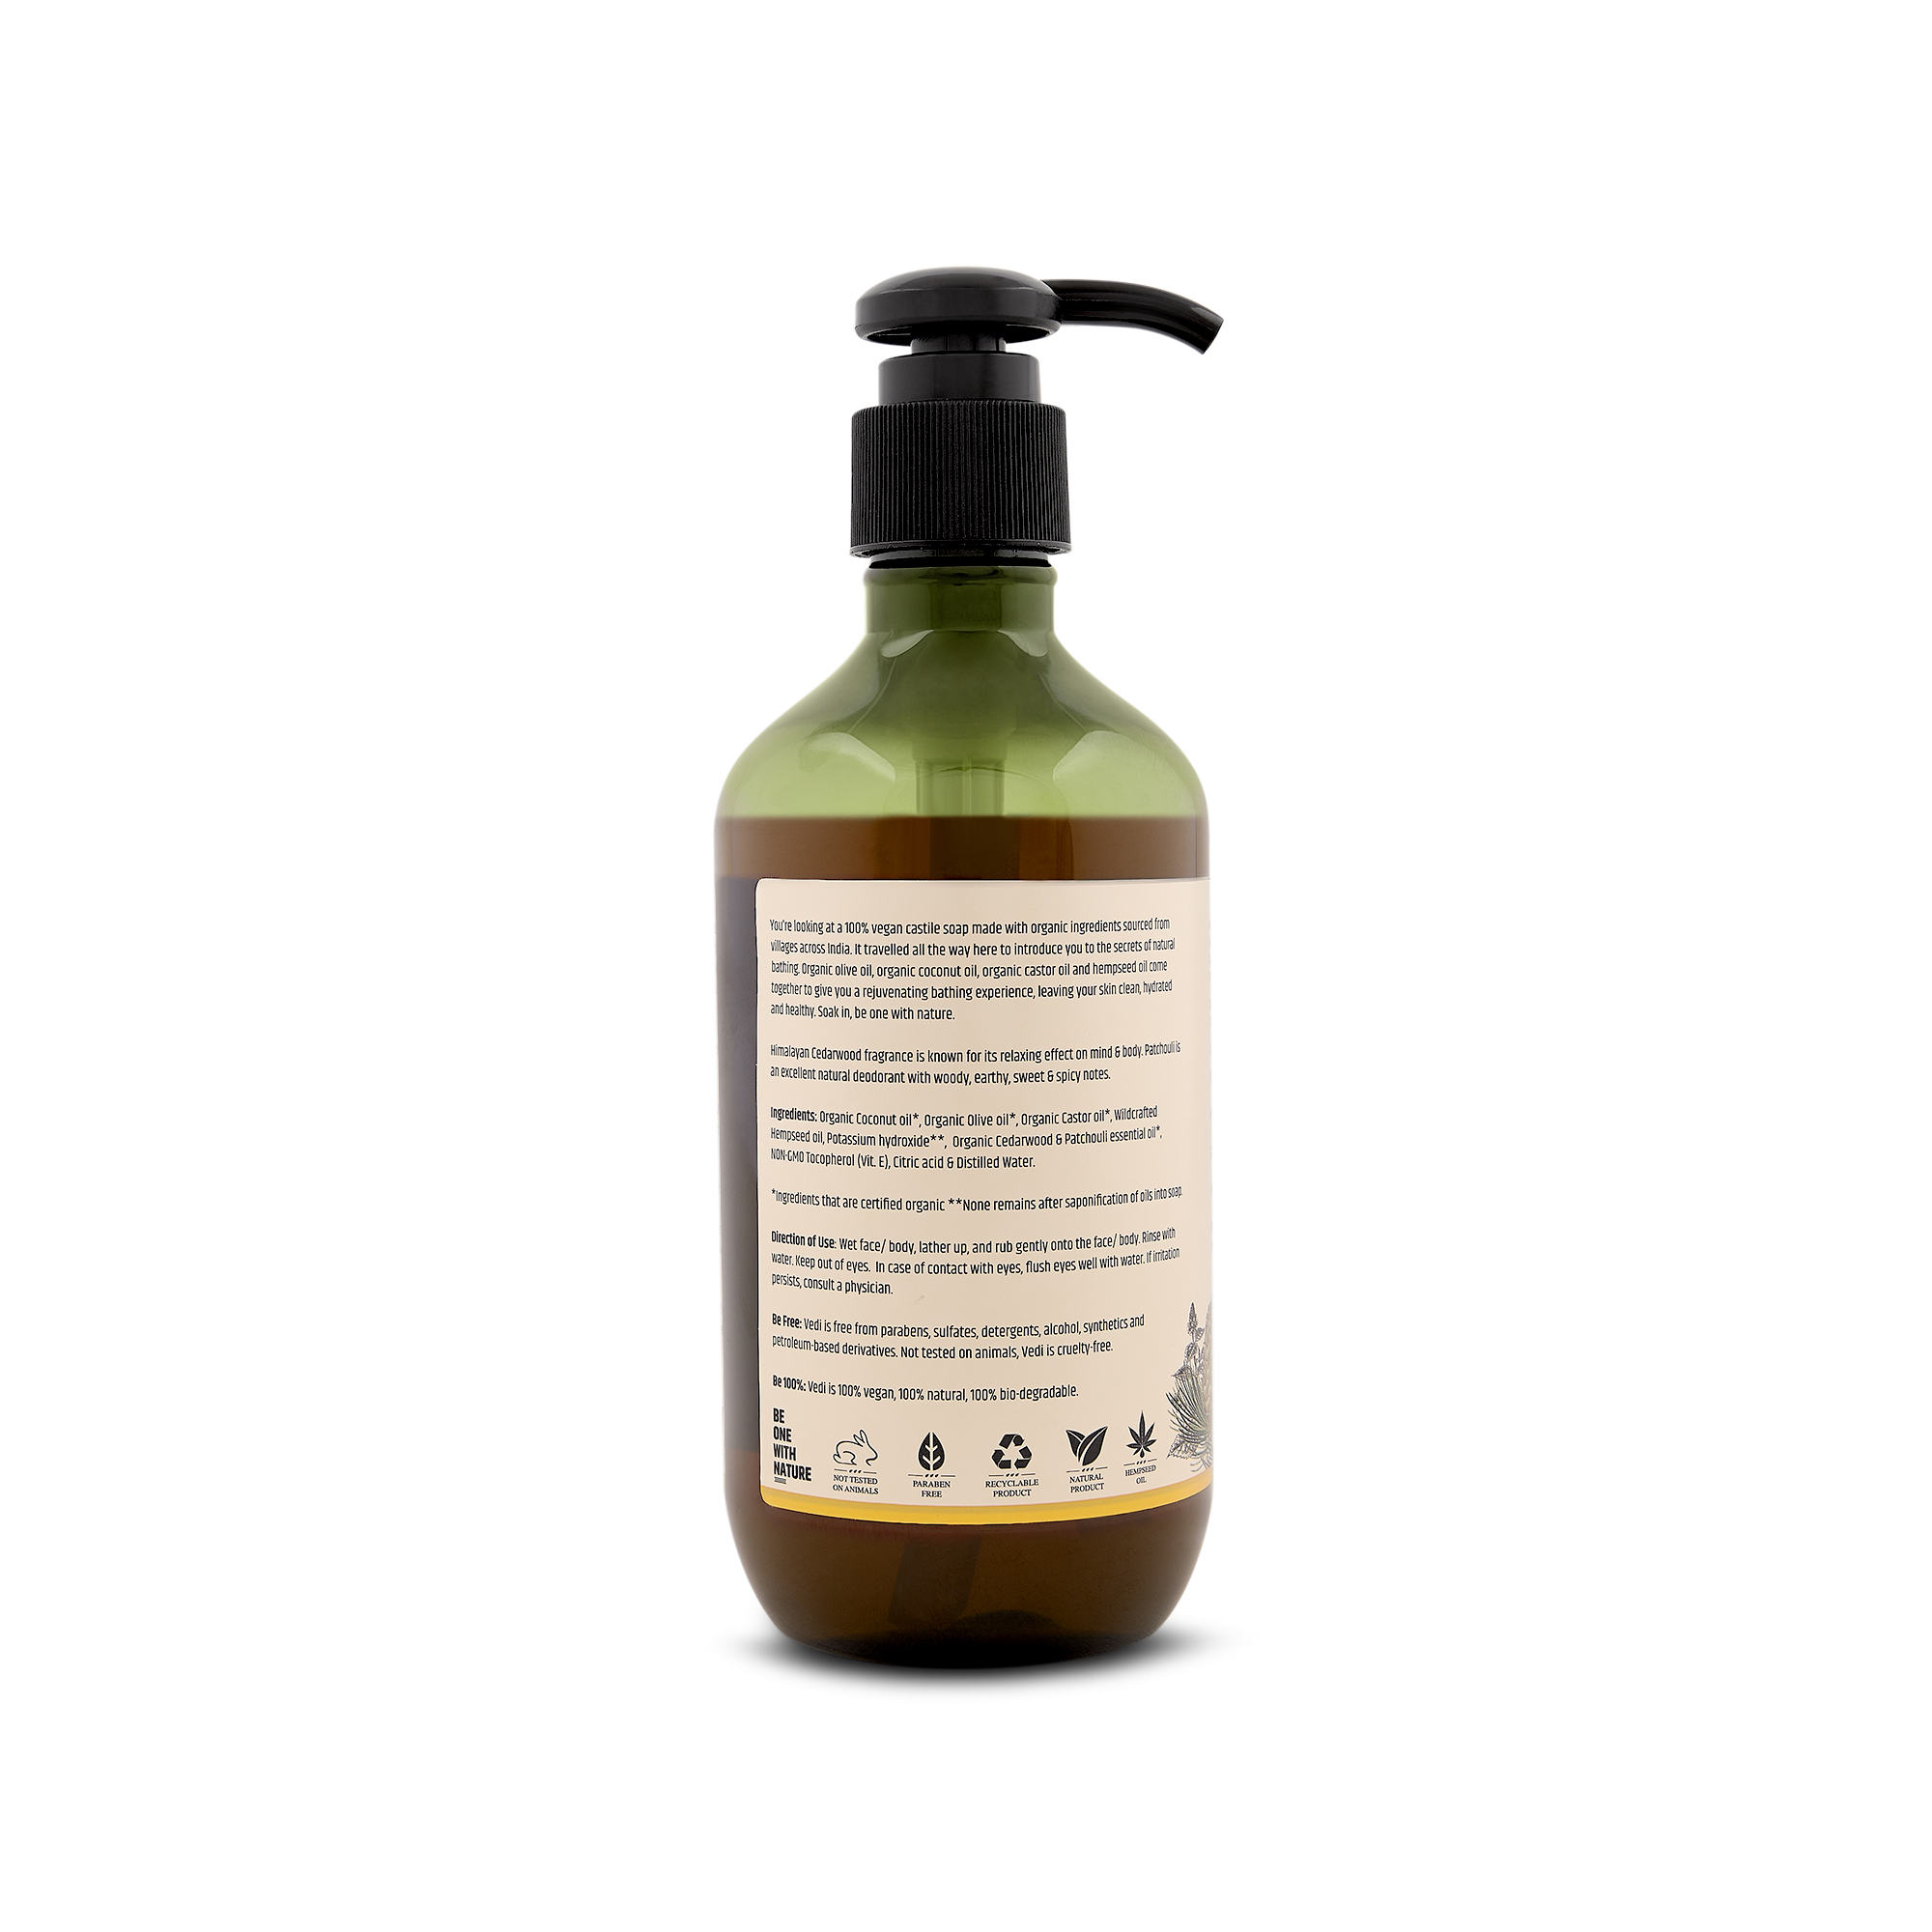 Vedi Herbal Himalayan Cedarwood & Patchouli Liquid Castile Soap With Hempseed Oil